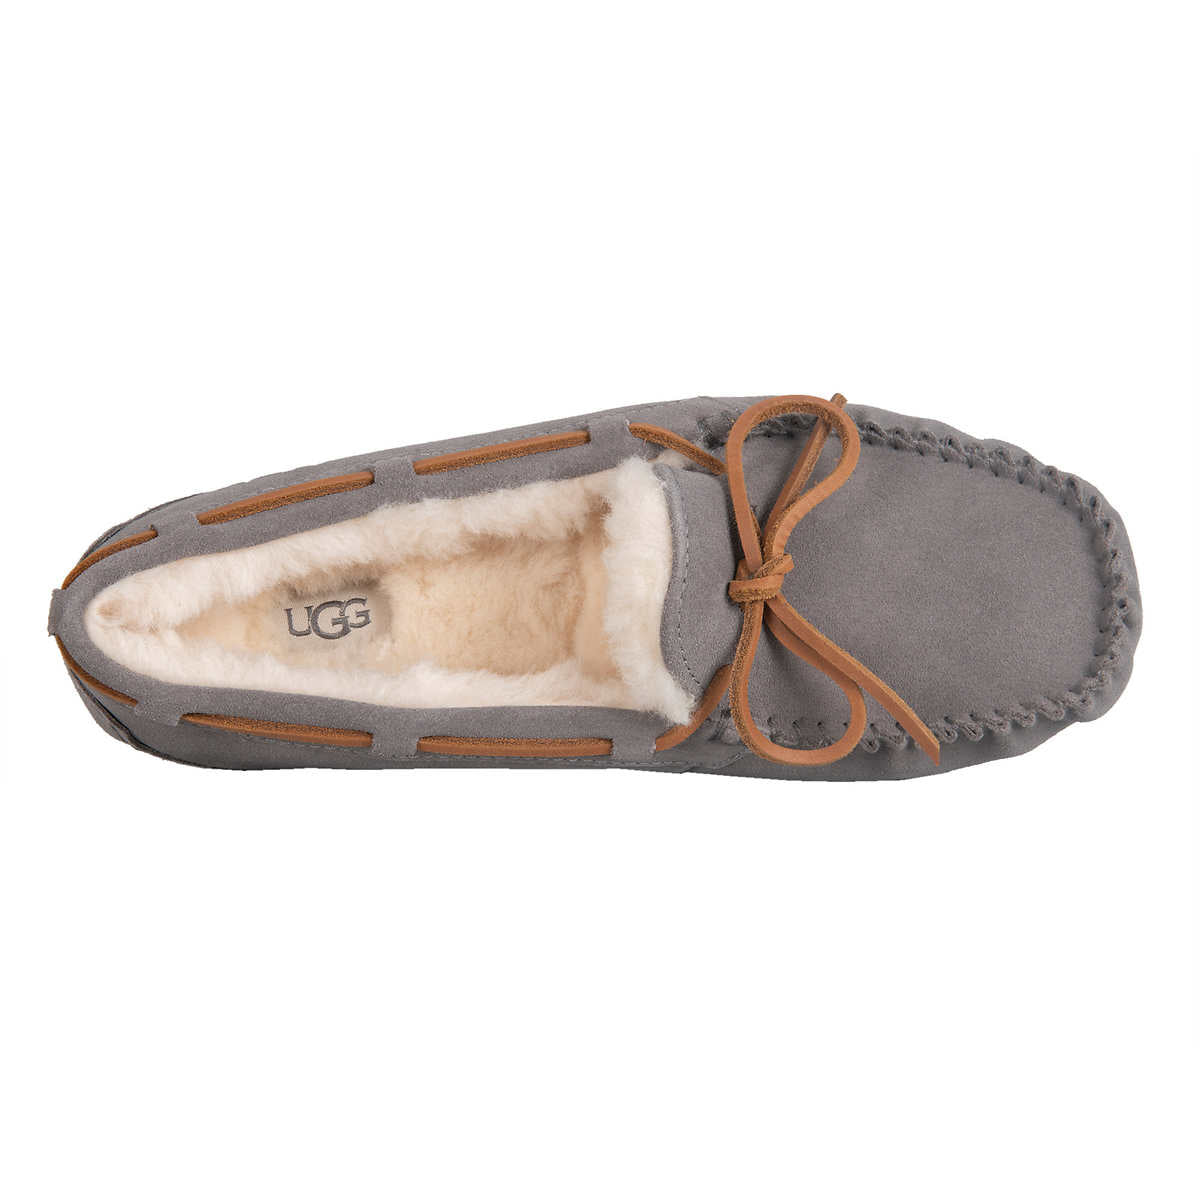 ugg-pantoufles-dakota-femme-women's-slippers-5